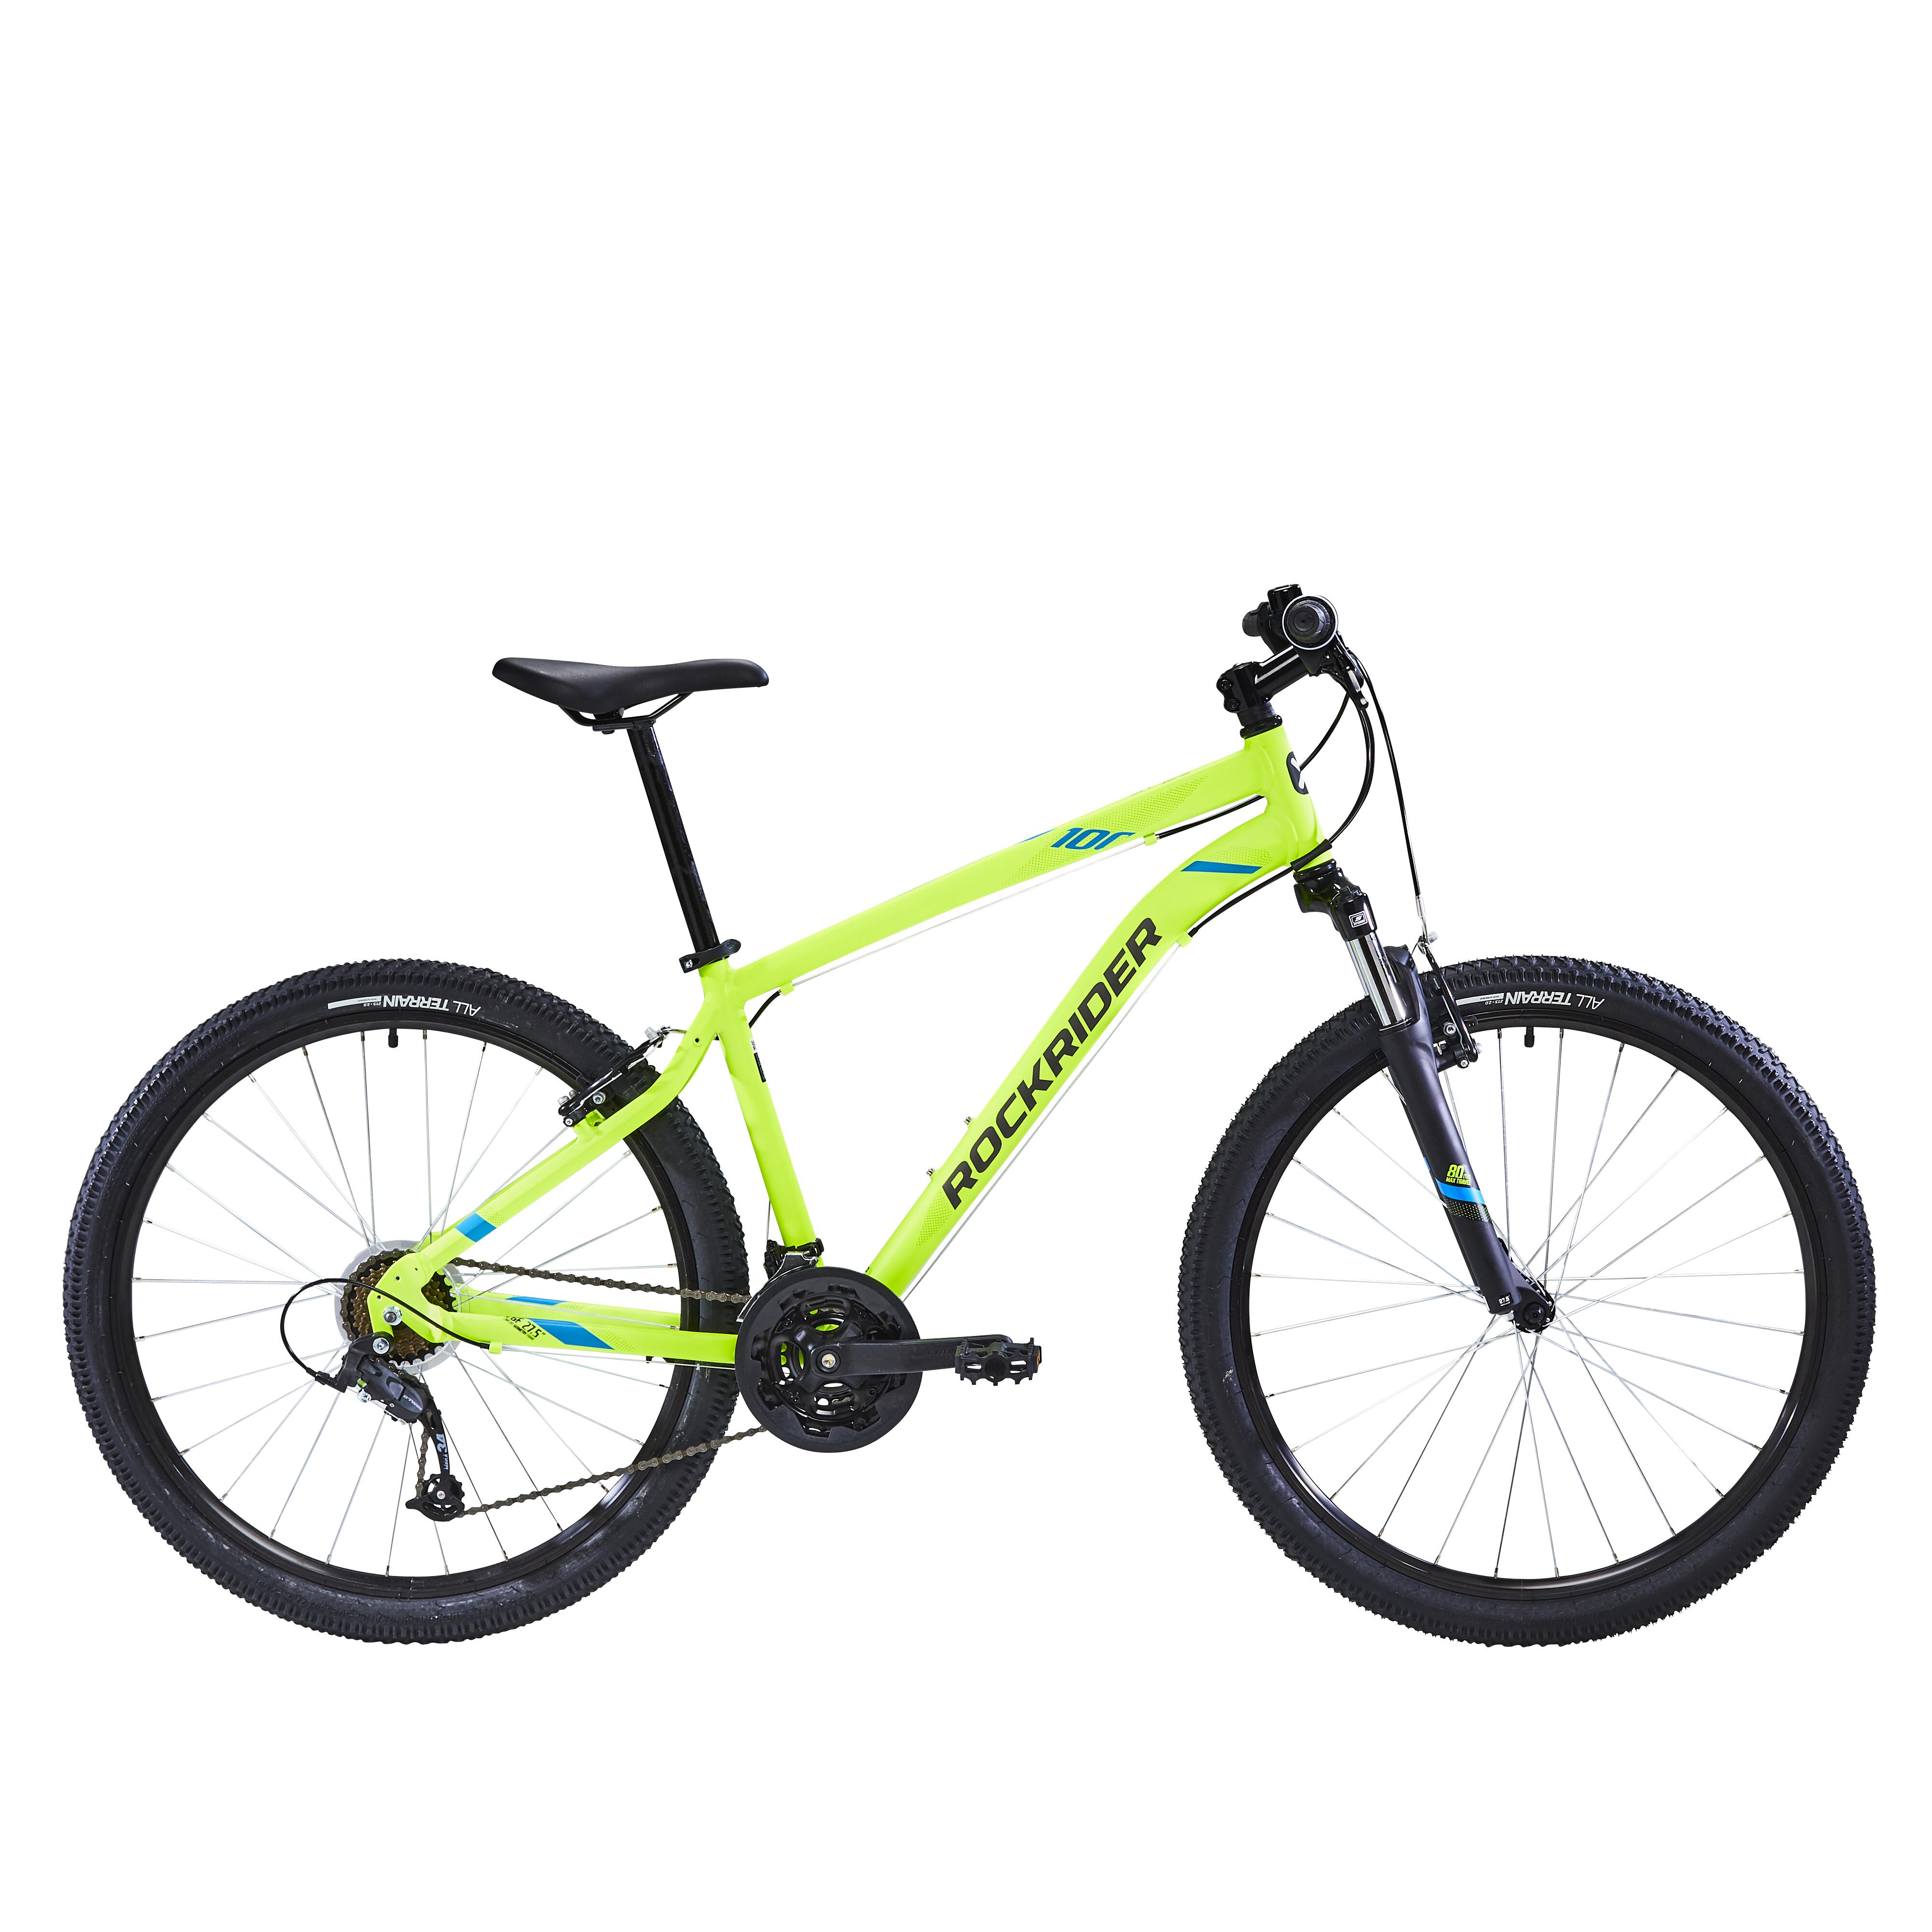 Bicicletă MTB ST 100 27,5″ Galben Fluorescent La Oferta Online decathlon imagine La Oferta Online